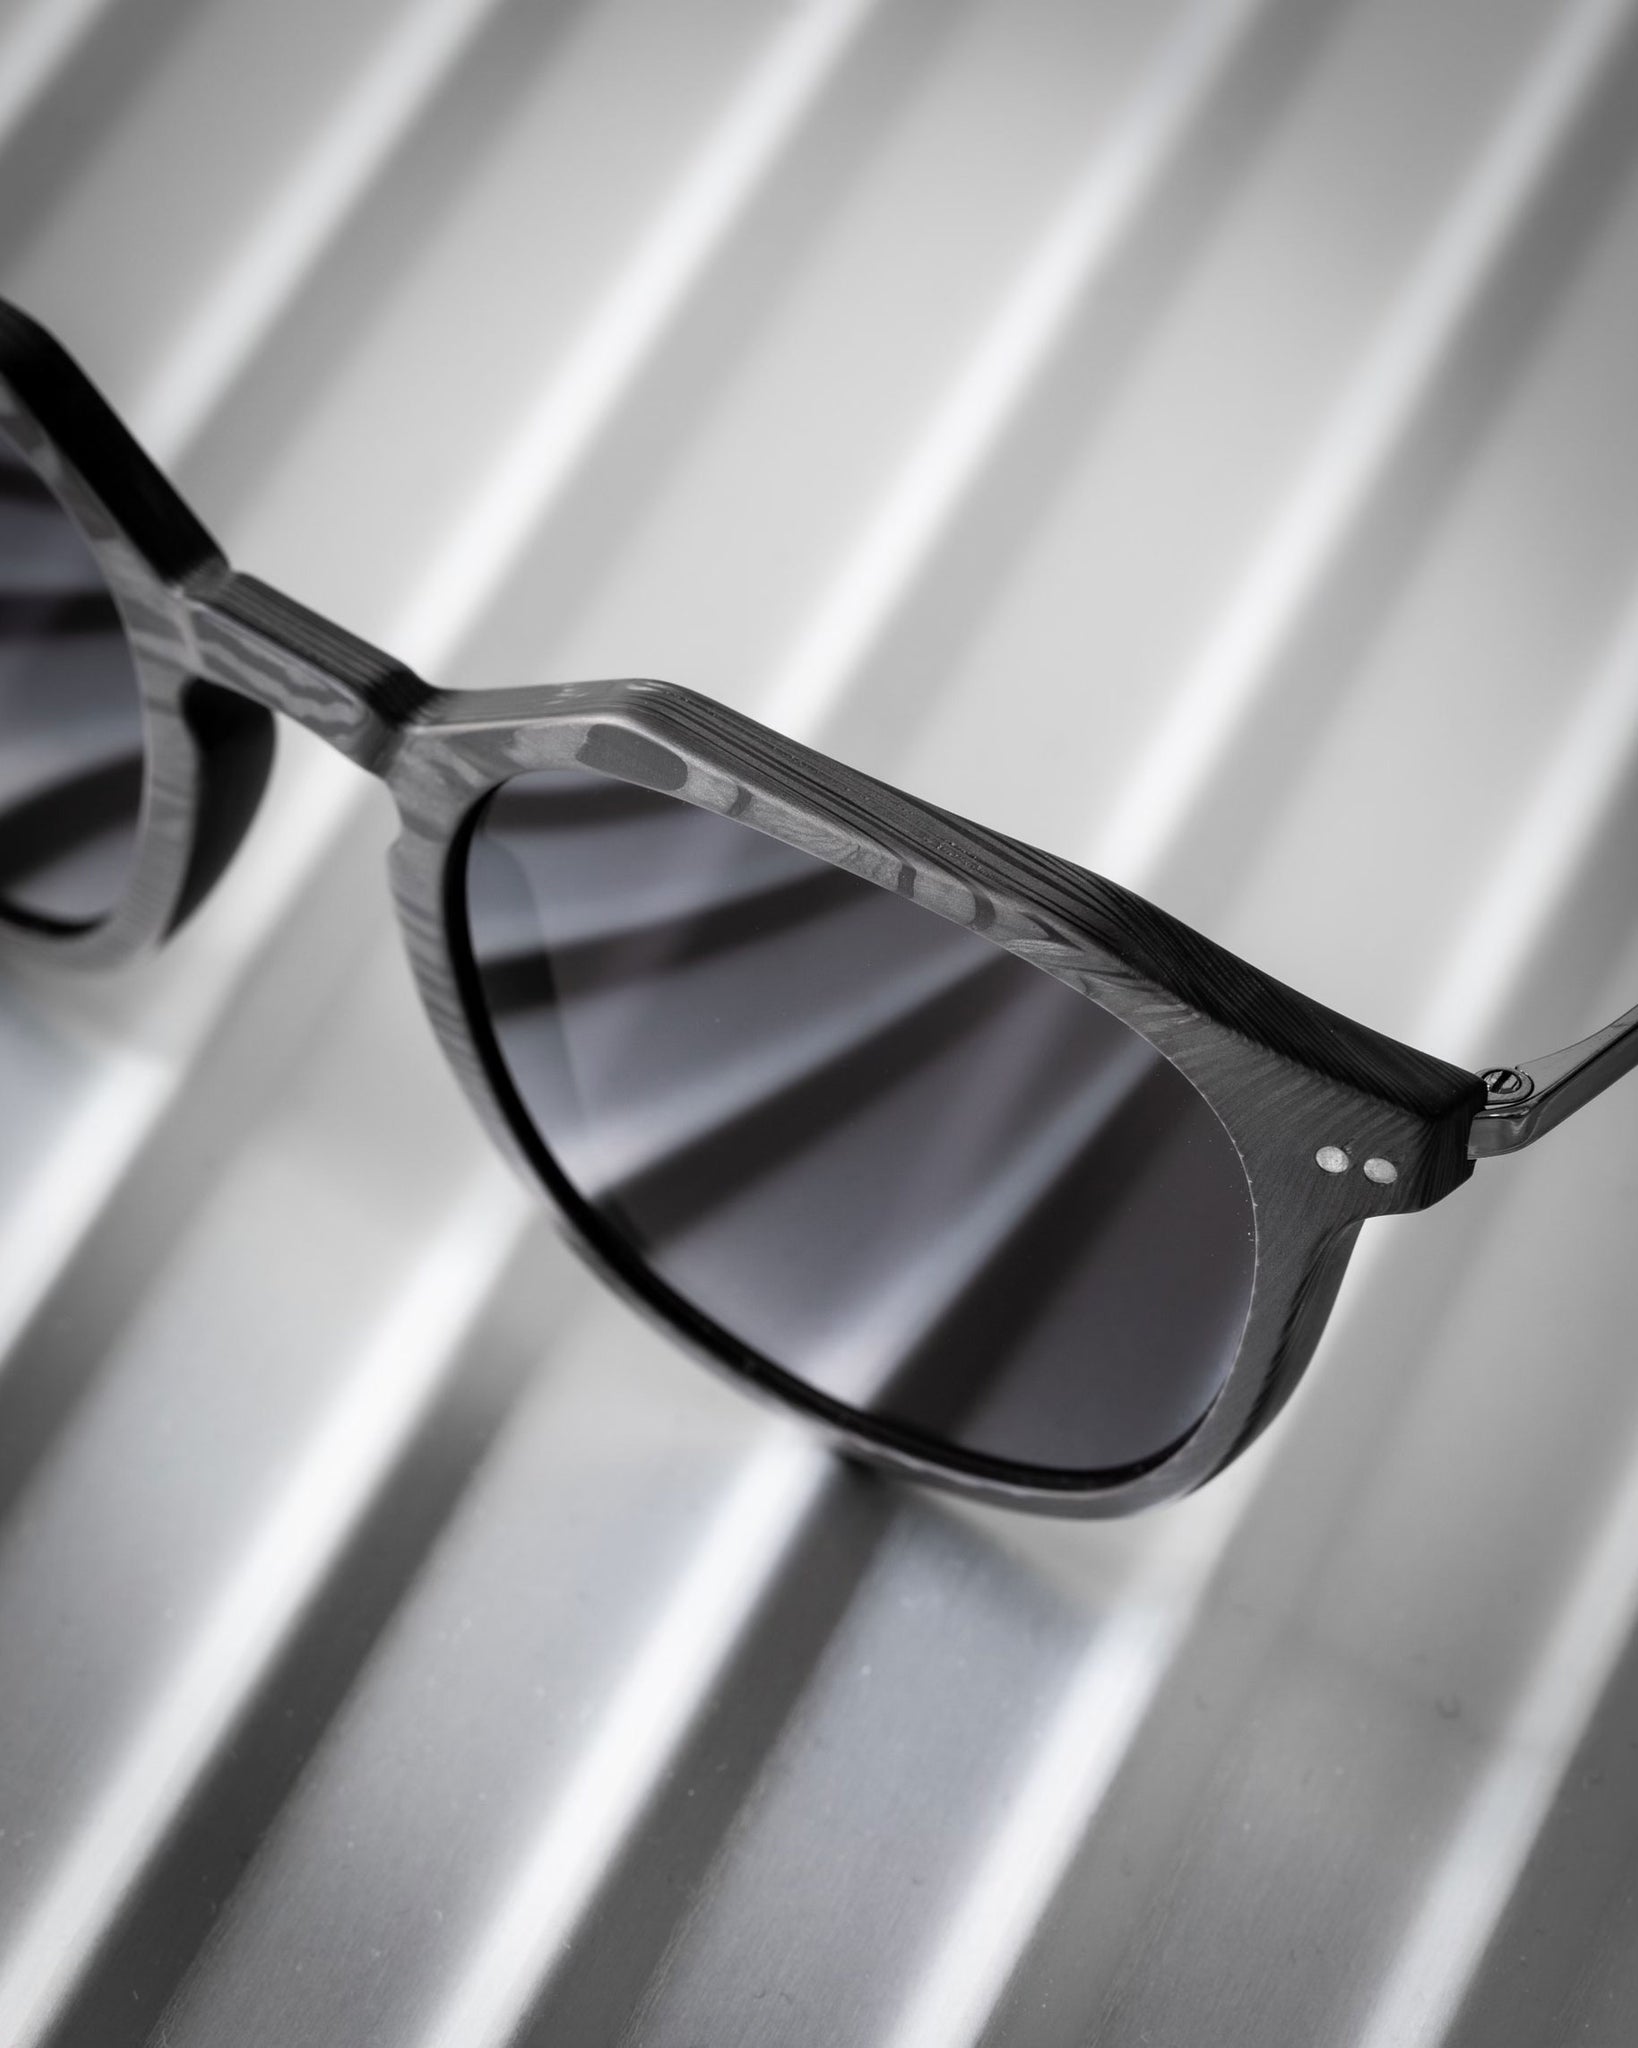 Roveri Eyewear all new CLM7 carbon-titanium sunglass frame with Rimowa Cabin Classic photoshoot.